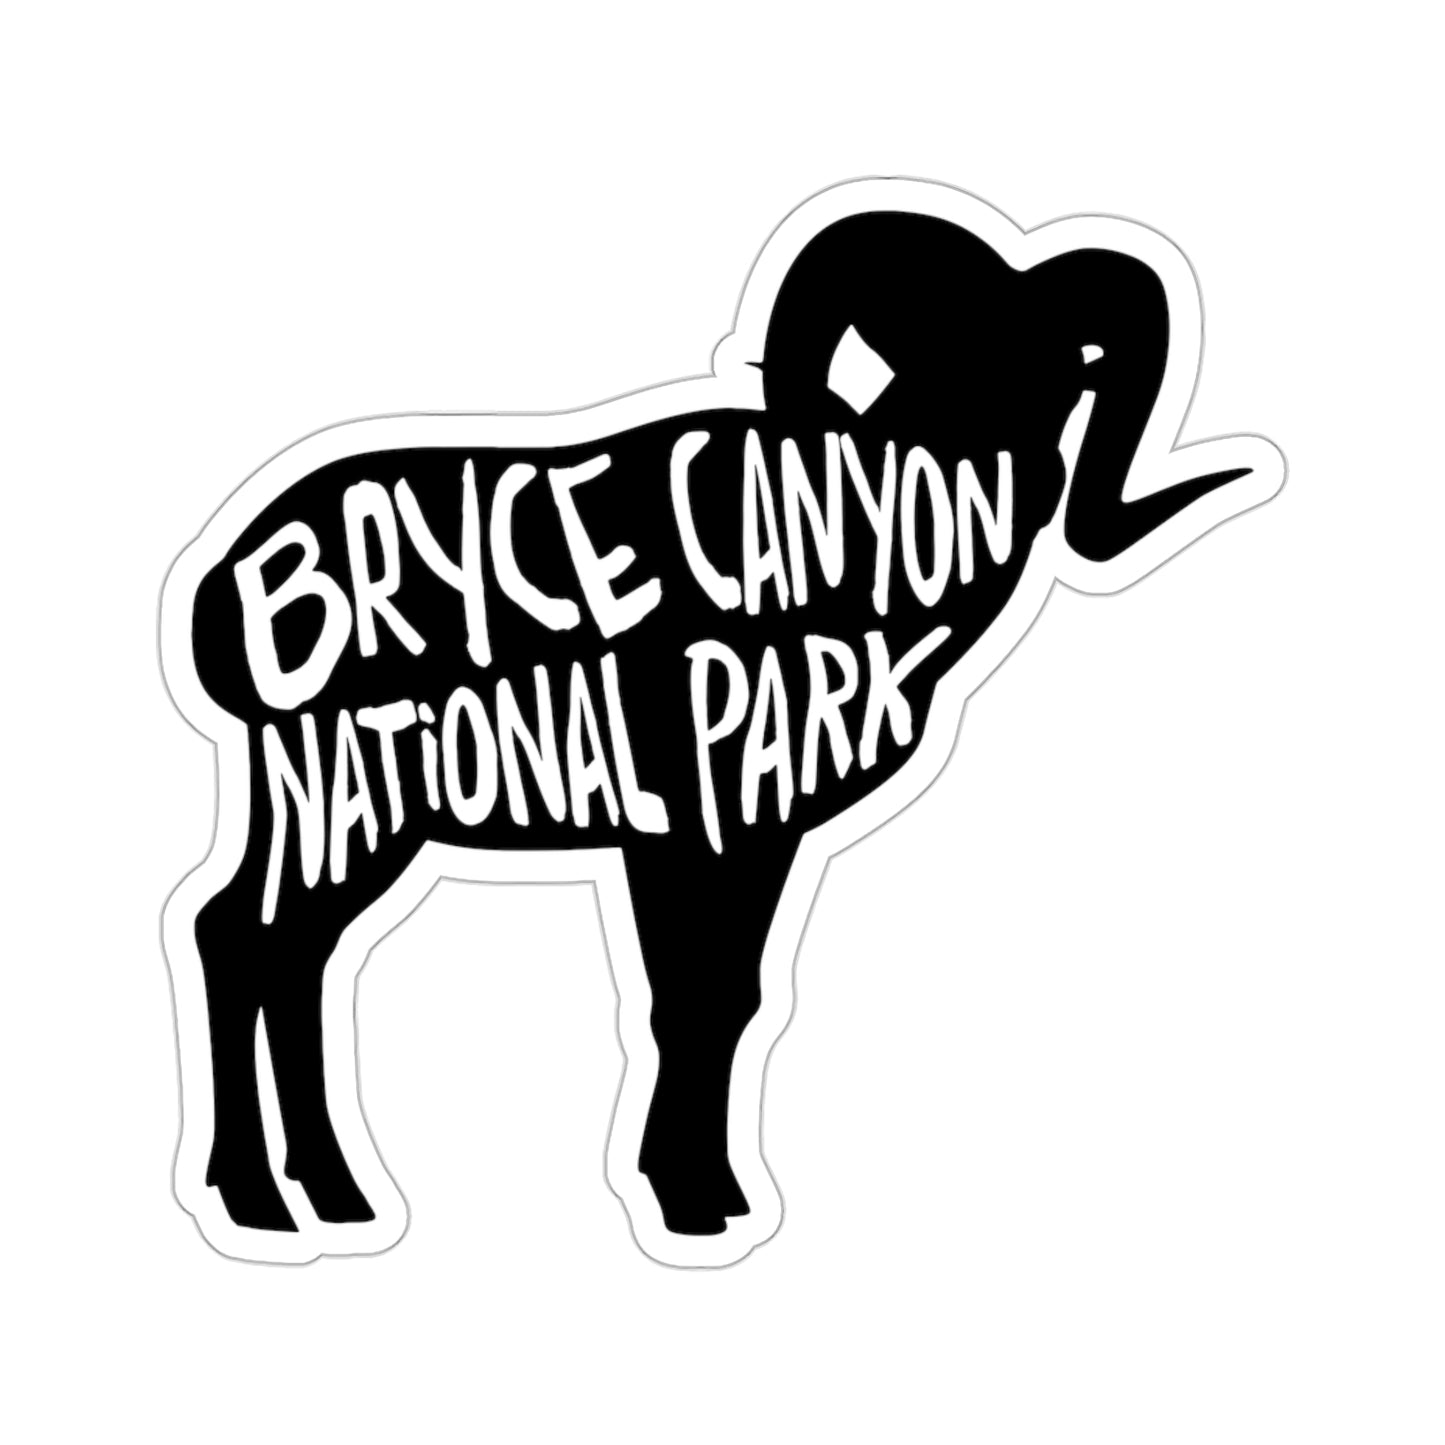 Bryce Canyon National Park Sticker - Bighorn Sheep